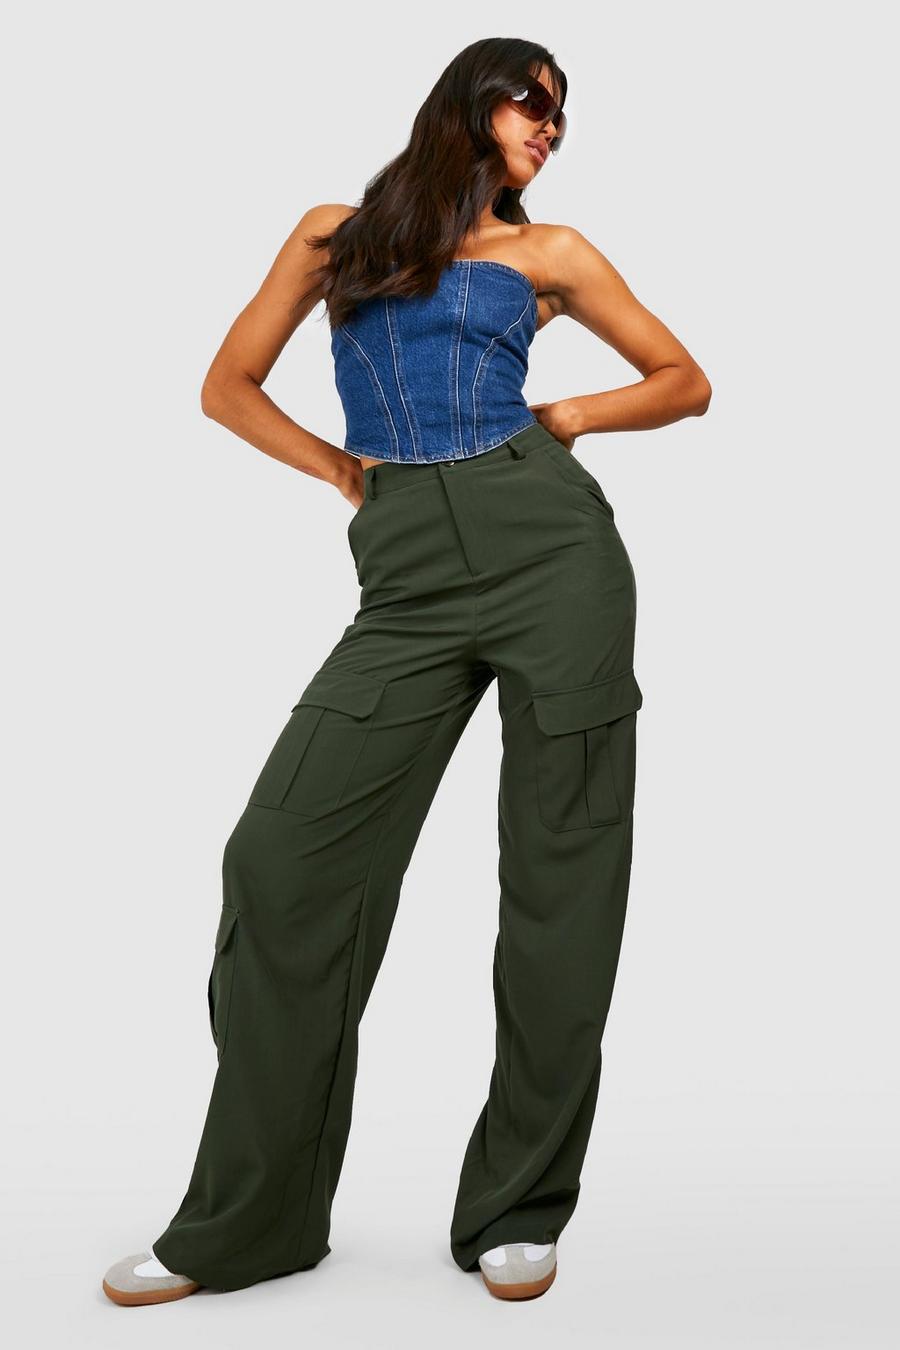 https://media.boohoo.com/i/boohoo/gzz54639_khaki_xl/female-khaki-tall-pocket-detail-high-waisted-wide-leg-cargo-trousers/?w=900&qlt=default&fmt.jp2.qlt=70&fmt=auto&sm=fit